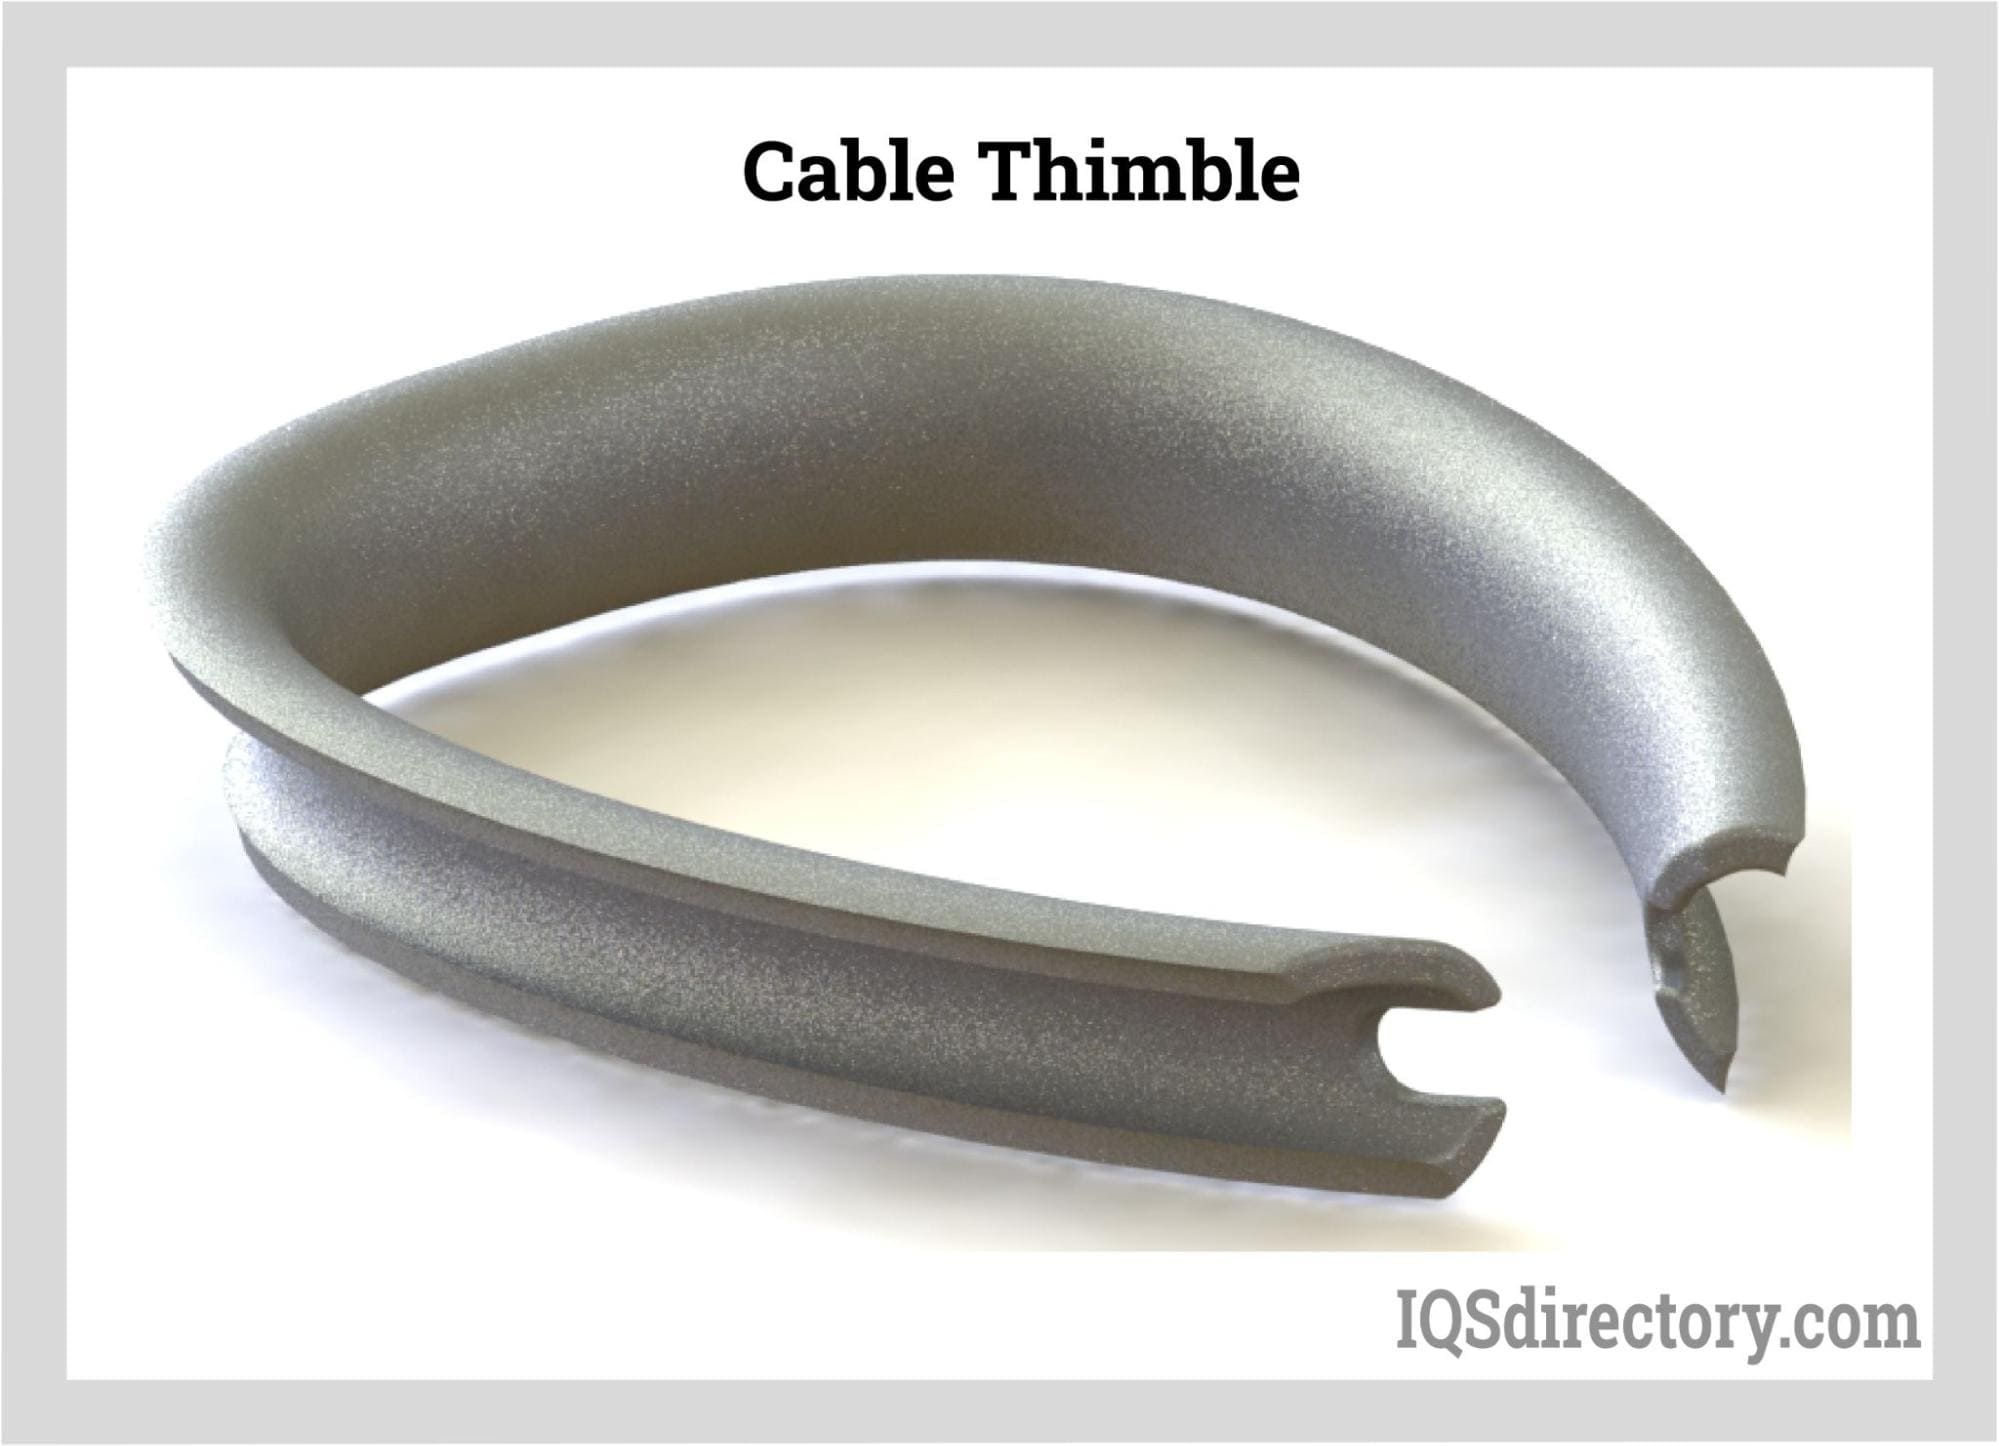 Cable Thimbles